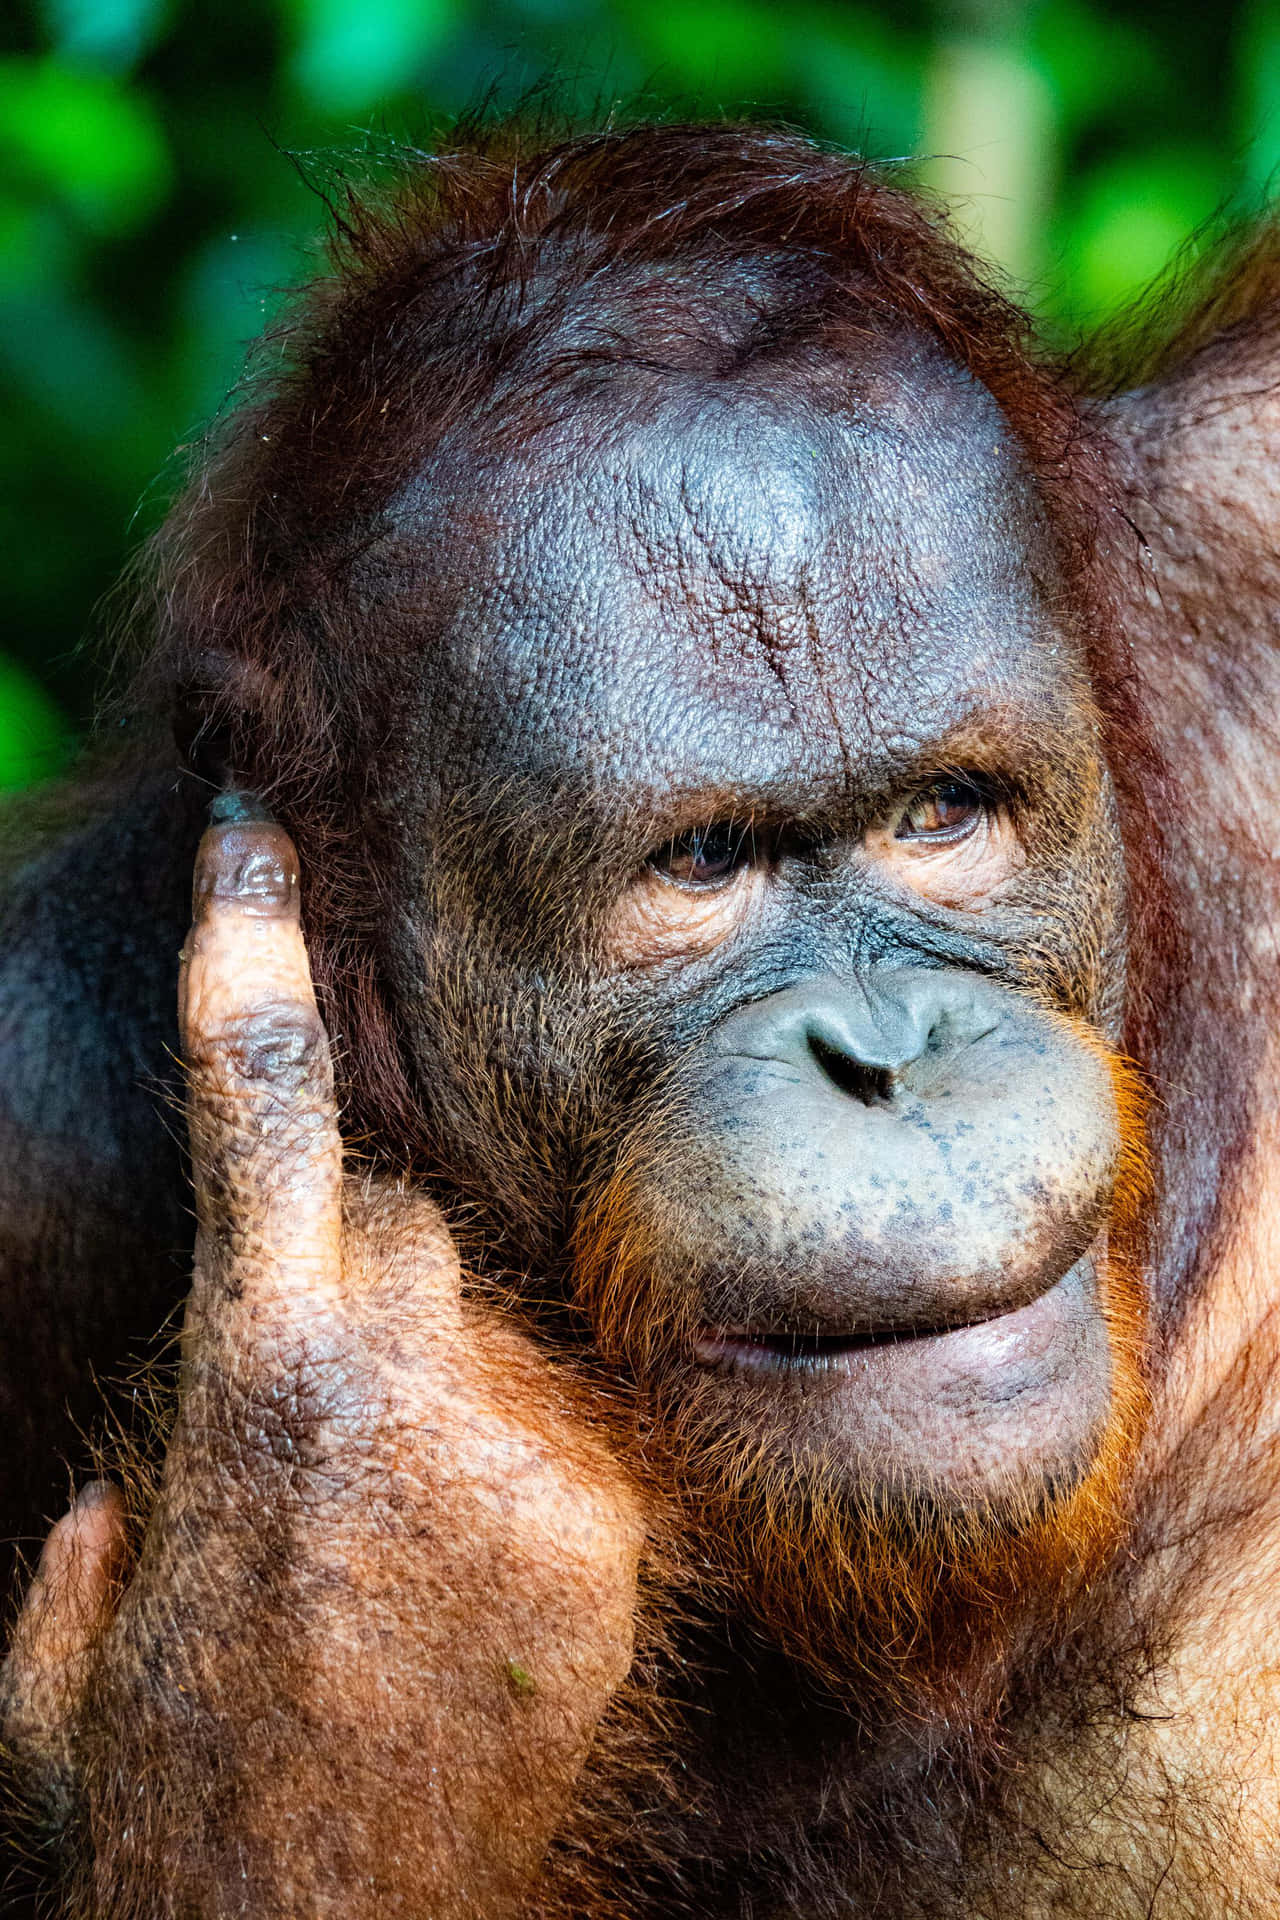 An Orangutan Sitting Comfortably on a Tree Branch